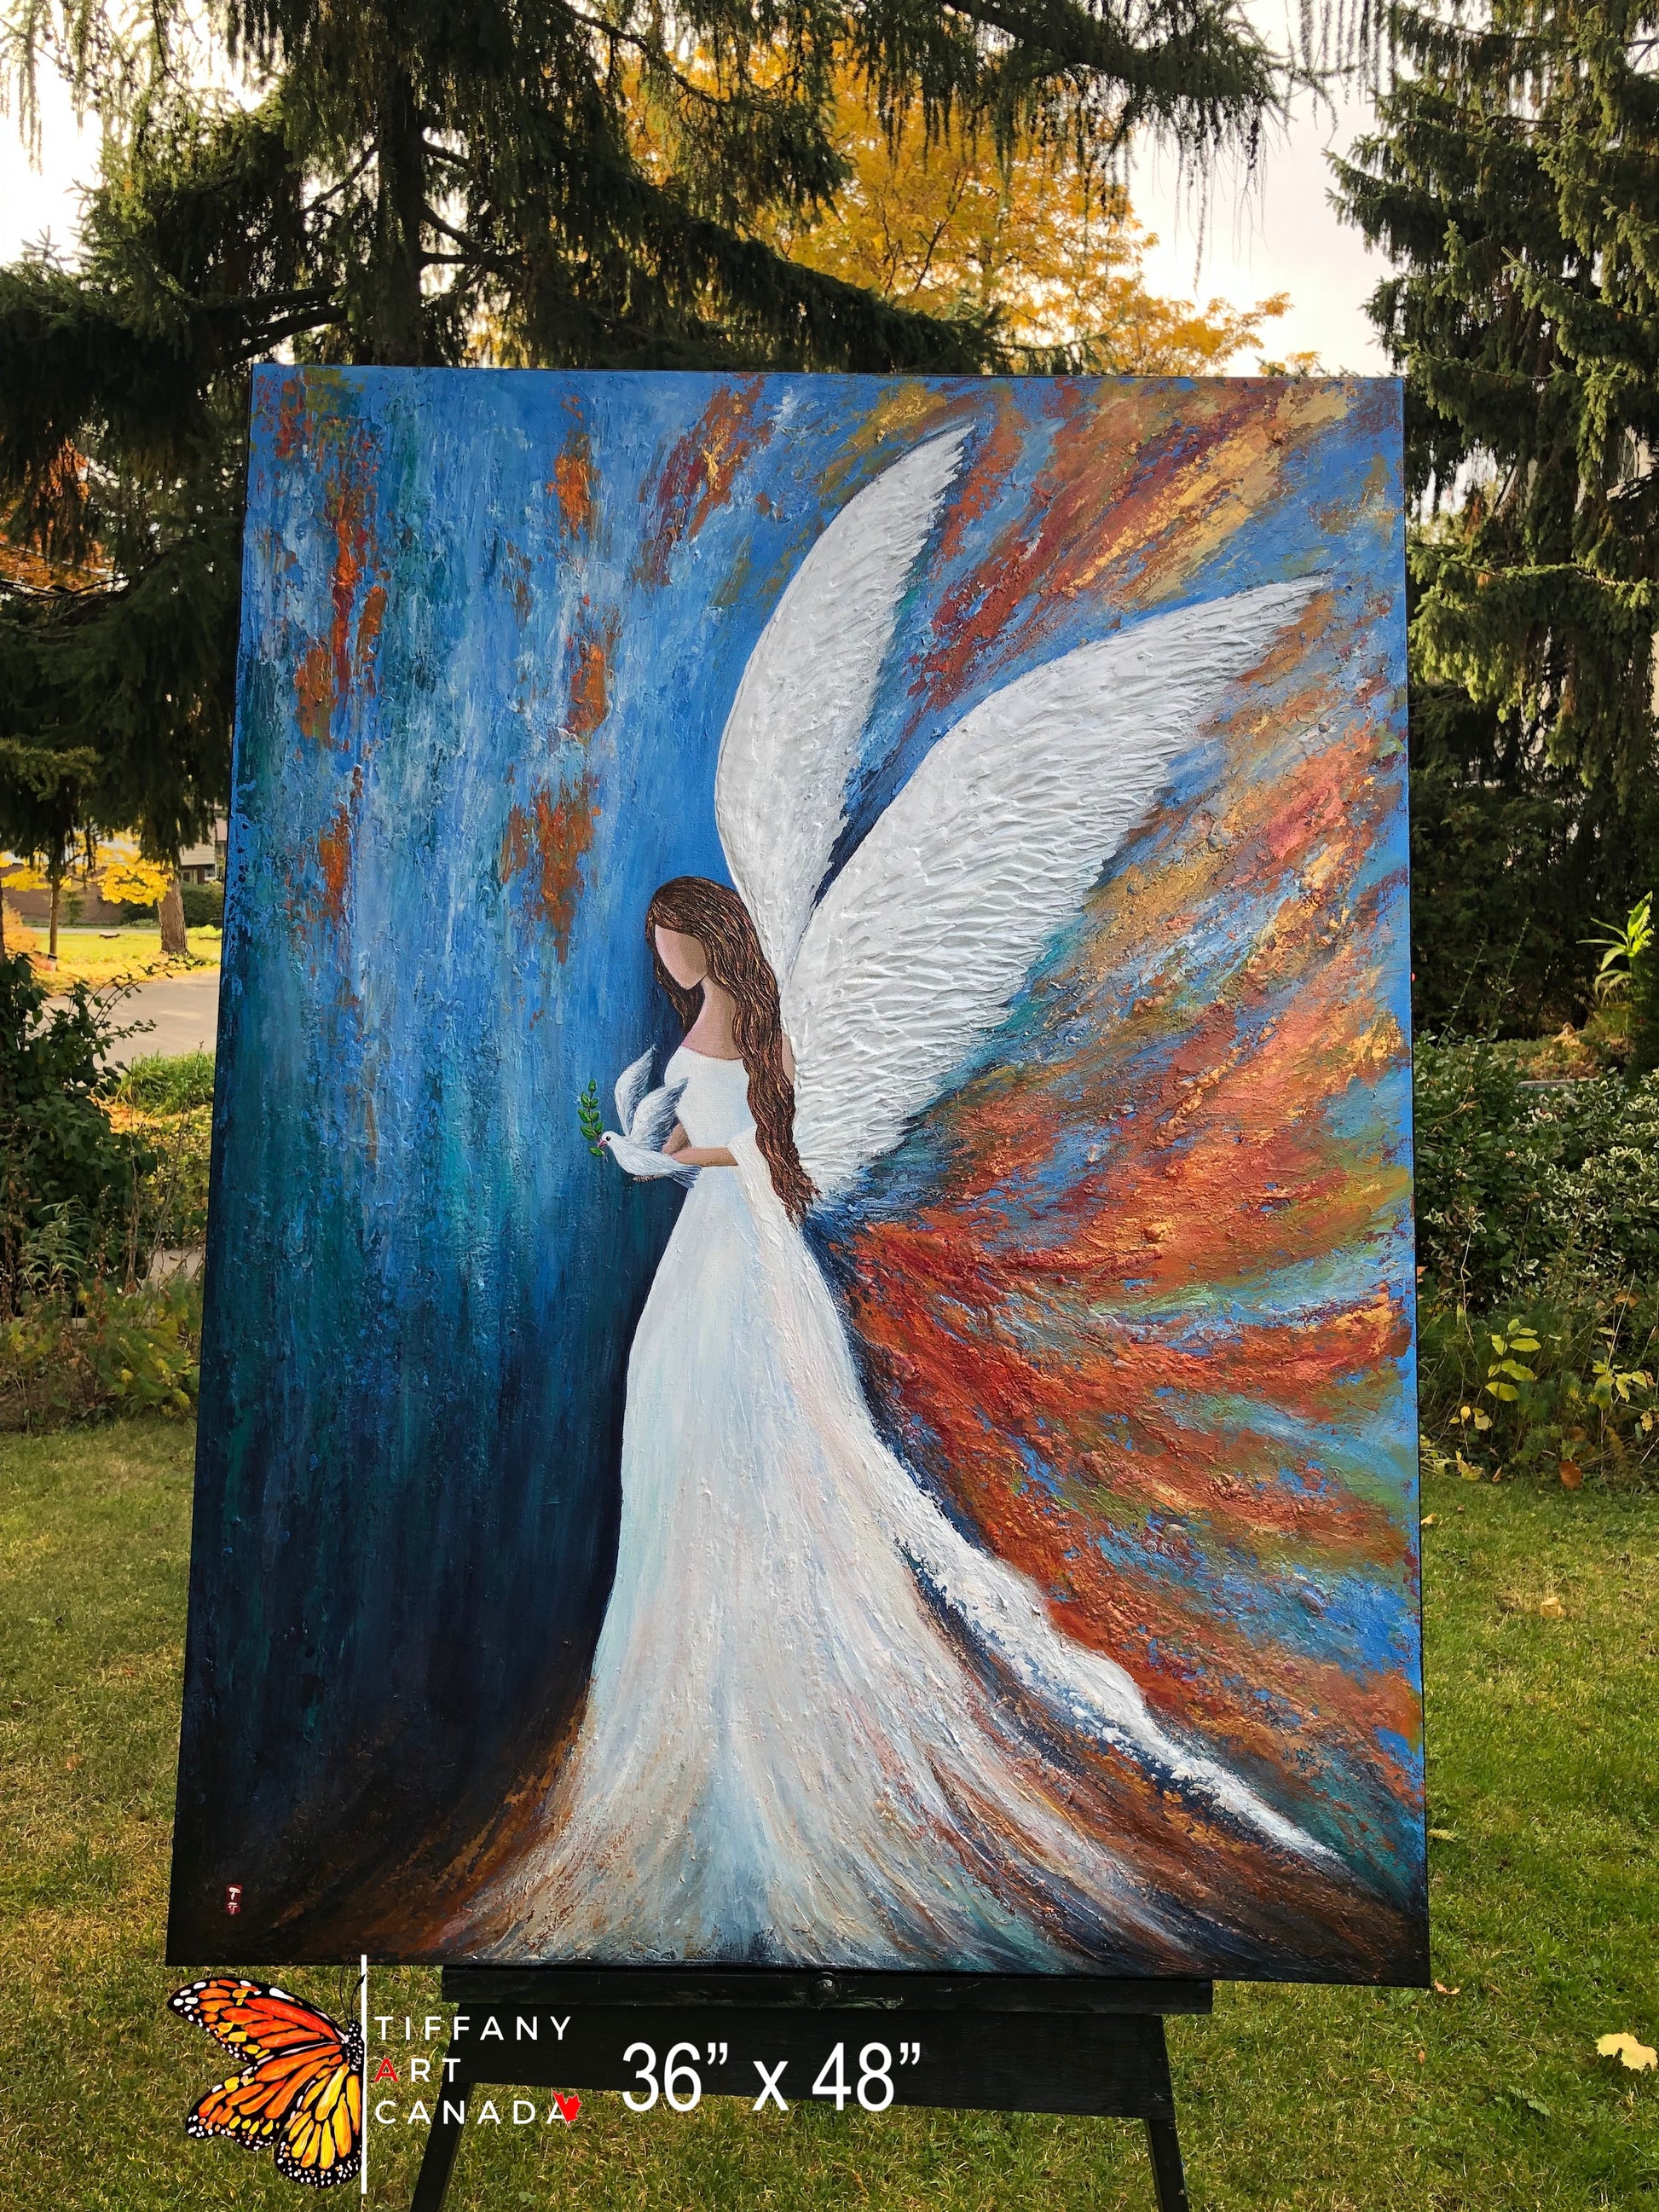 simple angel painting